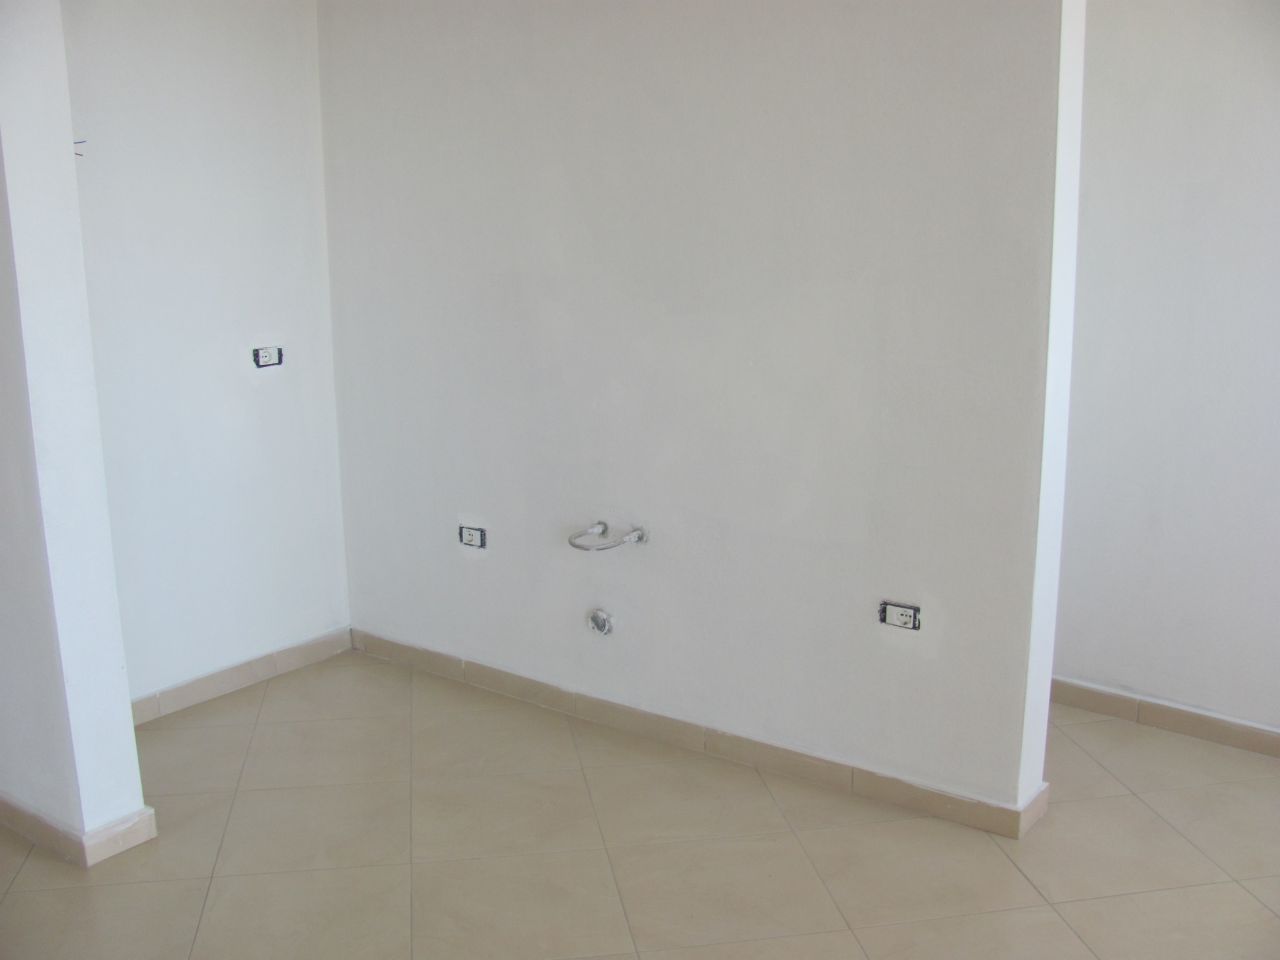 Albania Property for Sale in Vlora. Apartments in Albania, Vlora city